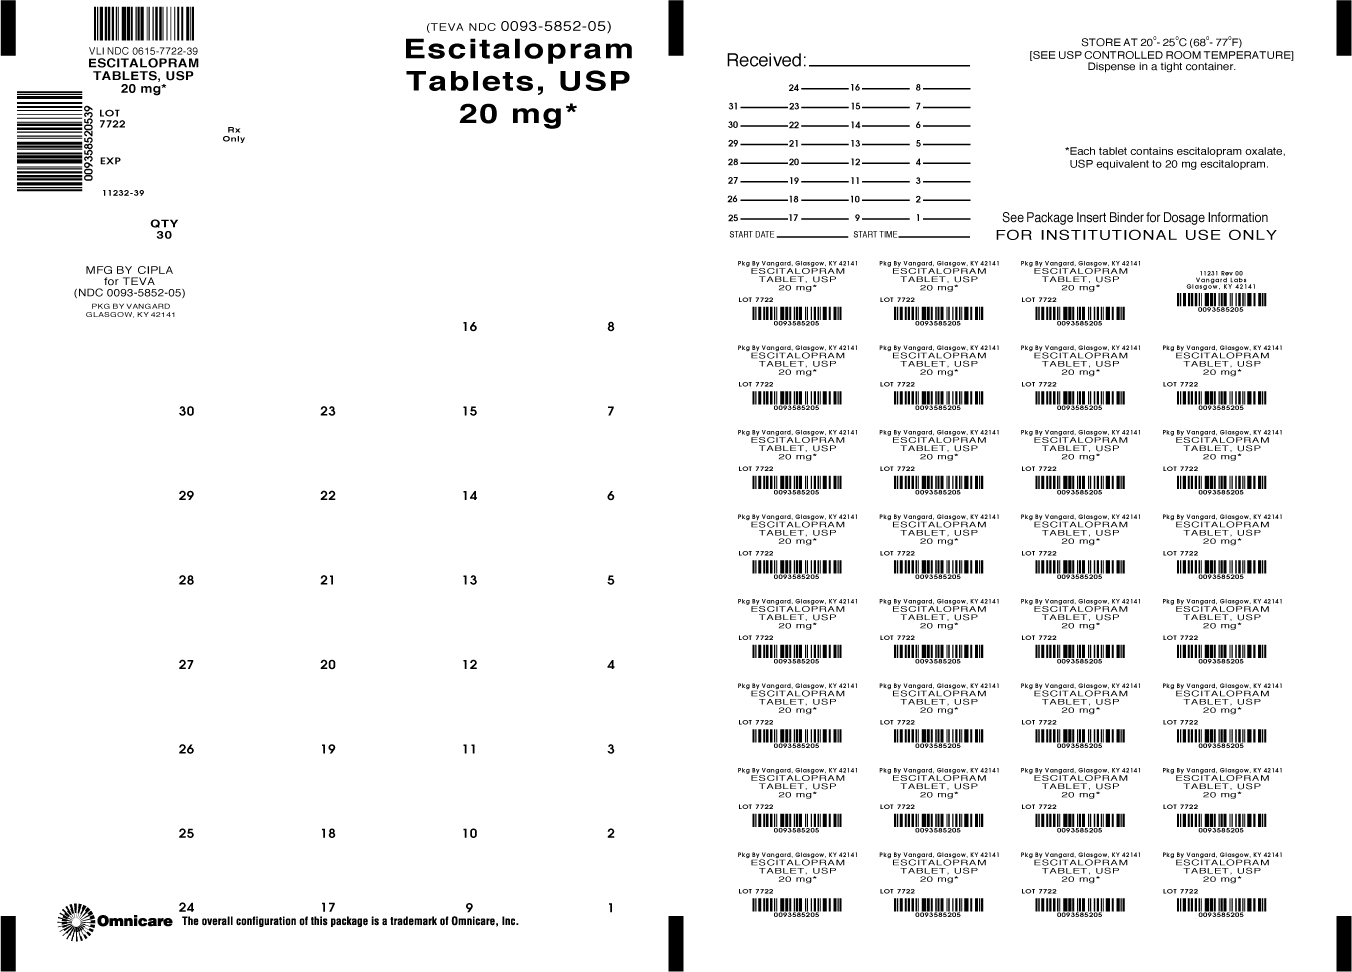 Principal Display Panel - Escitalopram Tablets, USP 20mg